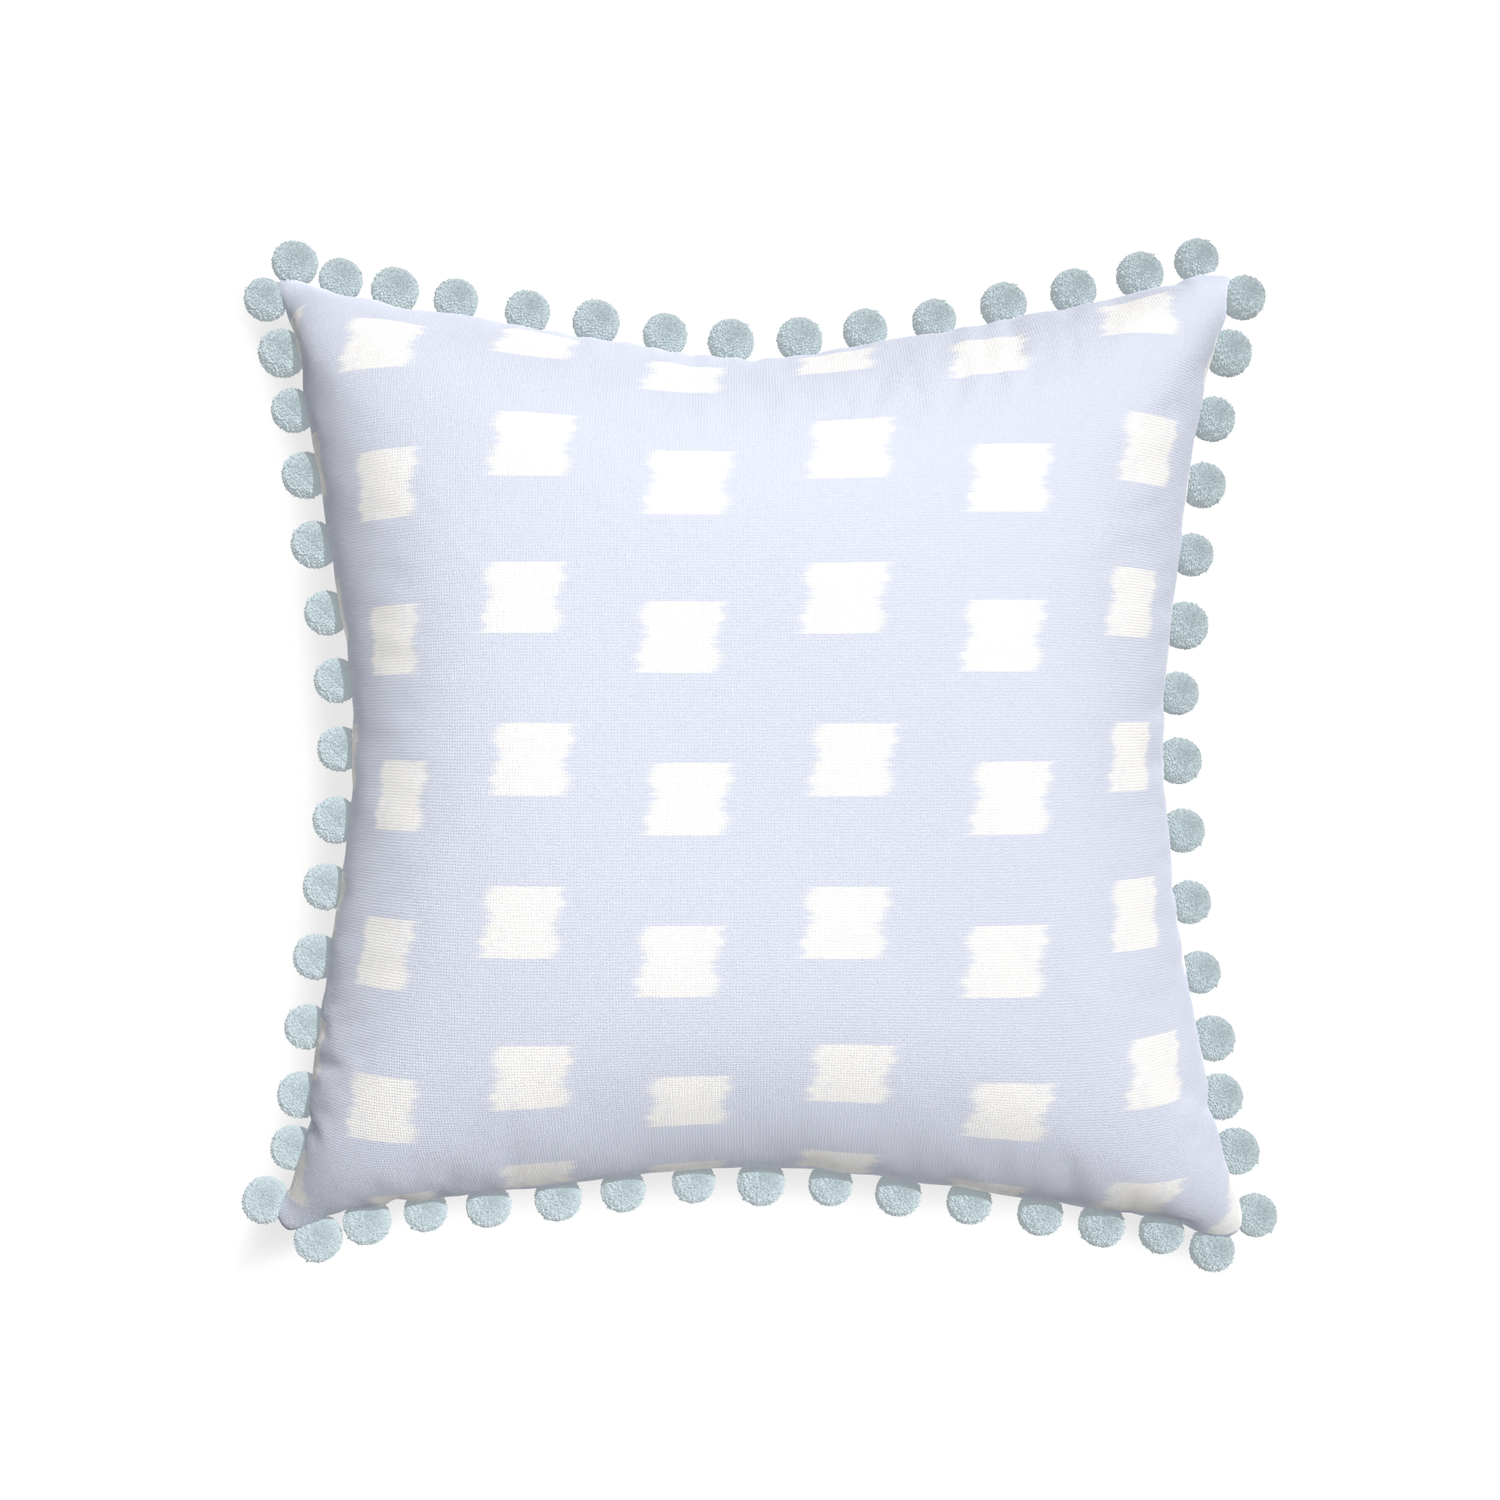 22-square denton custom sky blue patternpillow with powder pom pom on white background